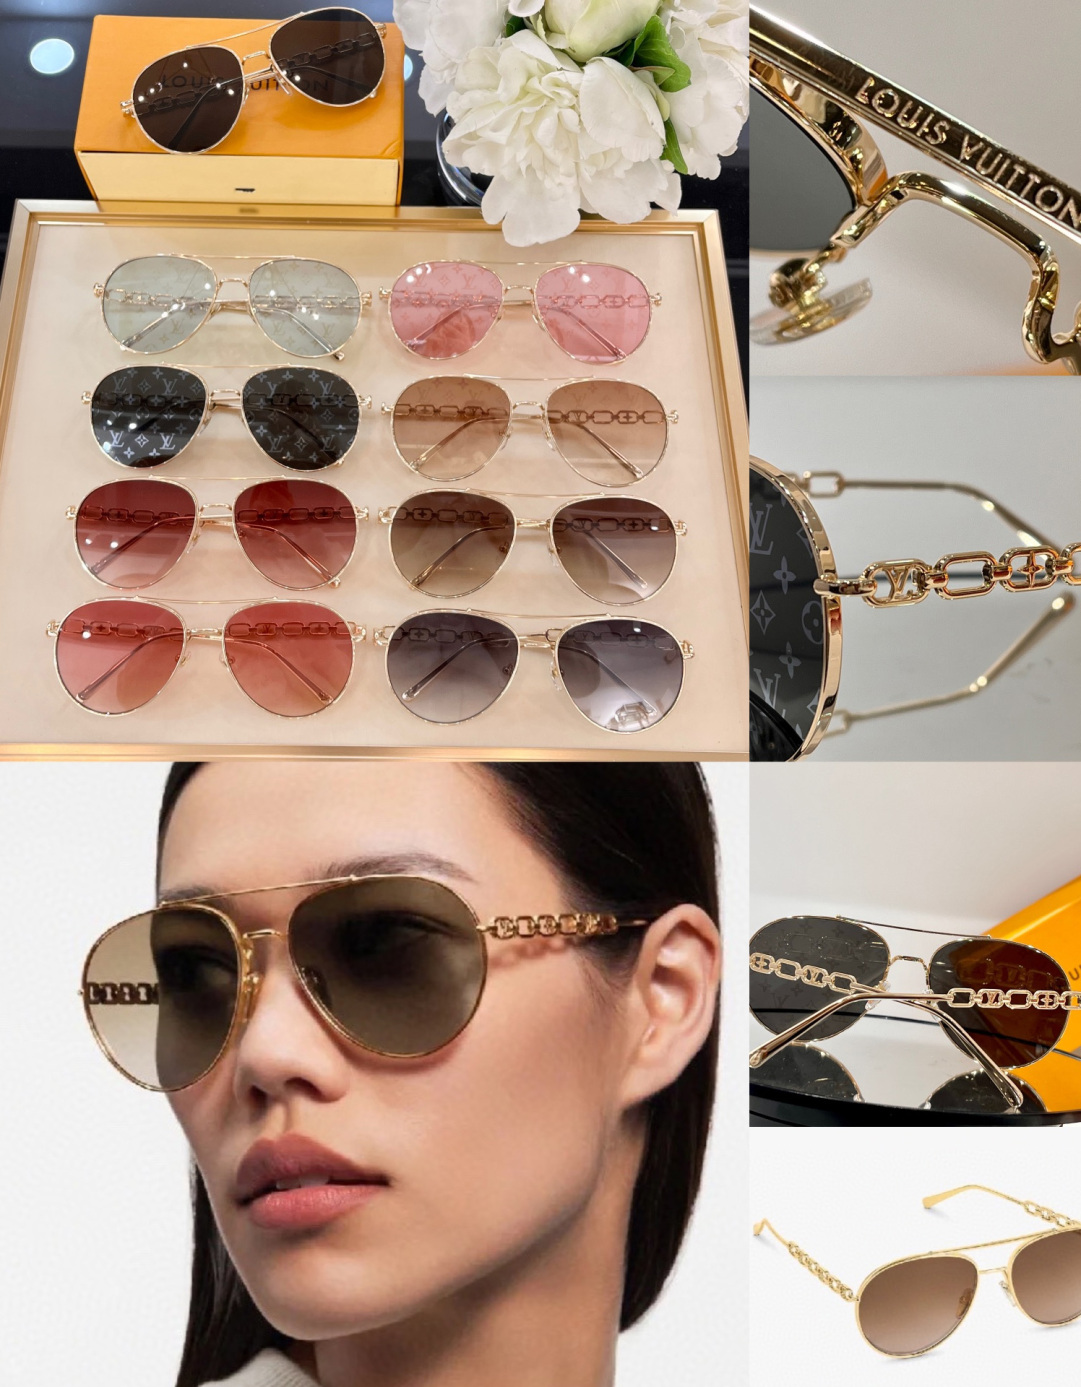 Louis Vuitton Goldtone Metal Frame The Party Sunglasses Z0926U